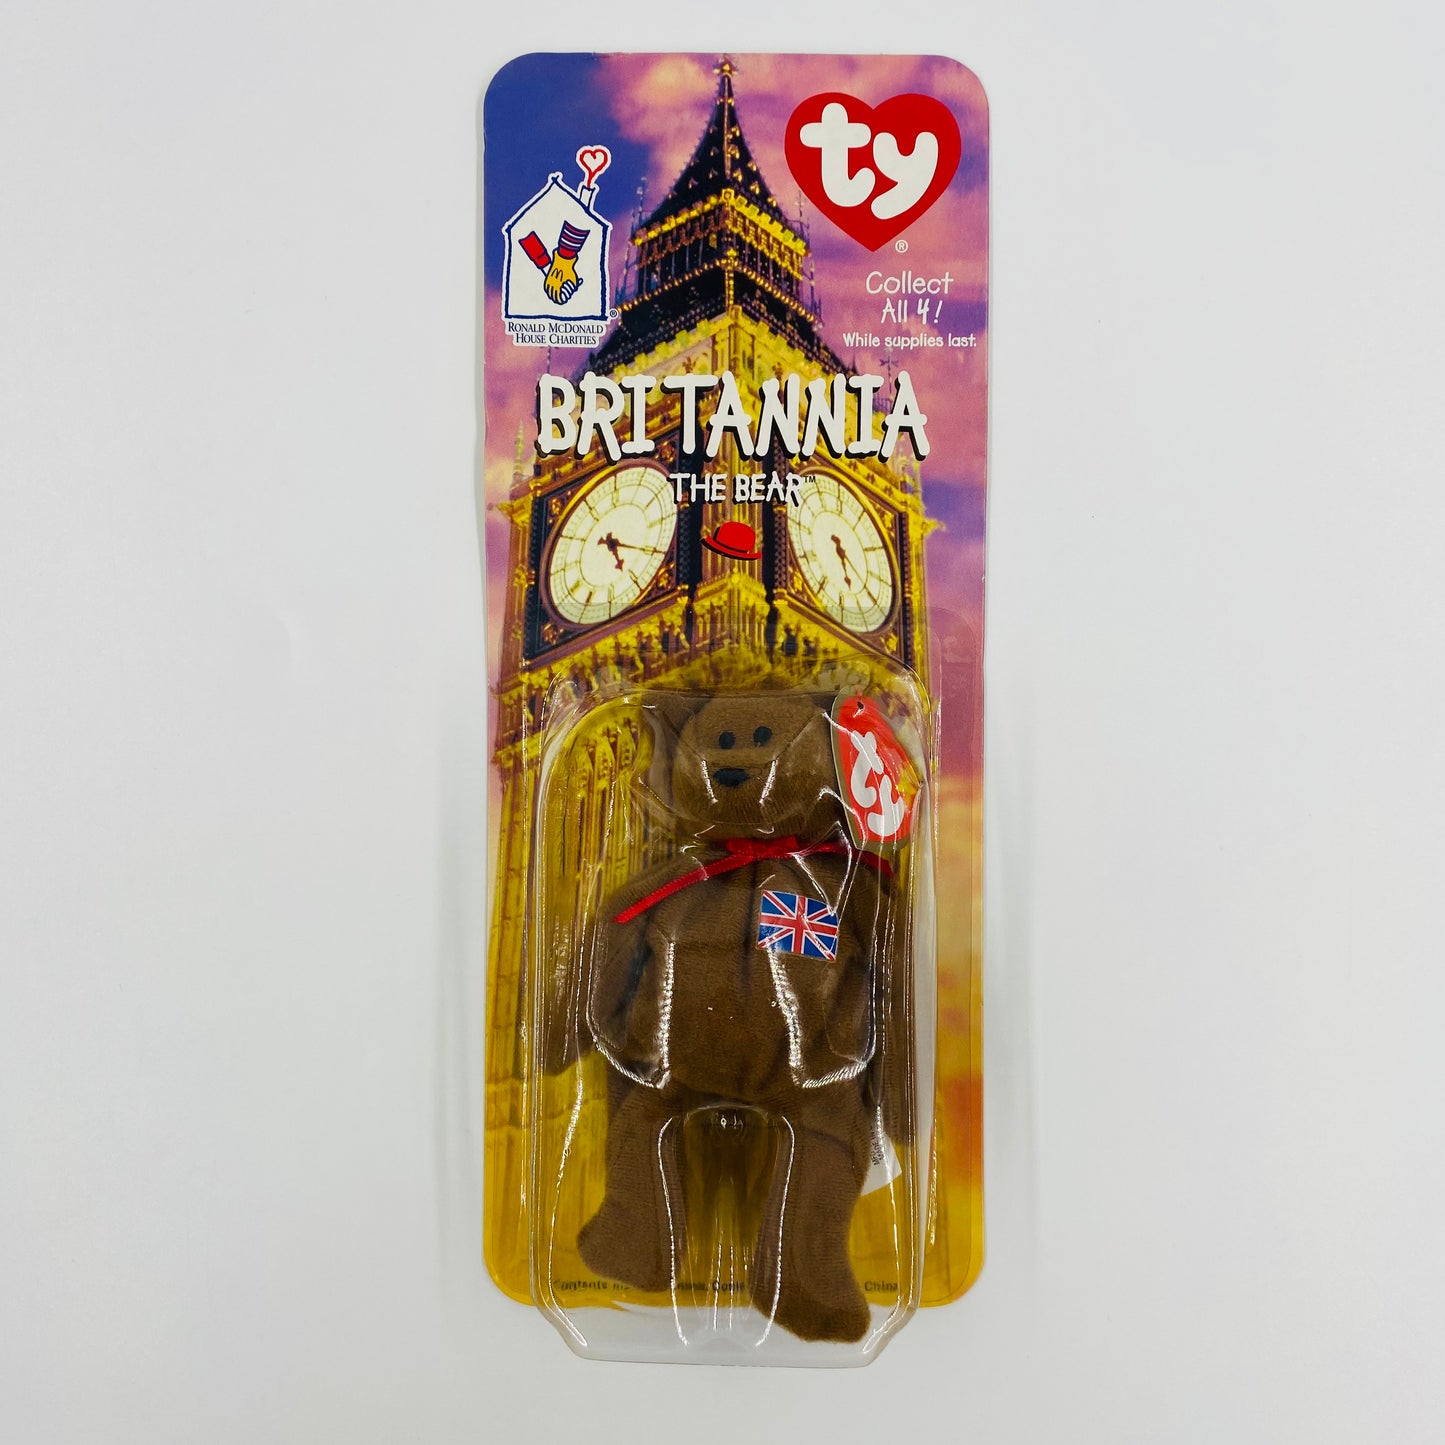 Teenie Beanie Babies complete set of 4 International Bears McDonald's Happy Meal bean bag plush toy animals (1999) carded